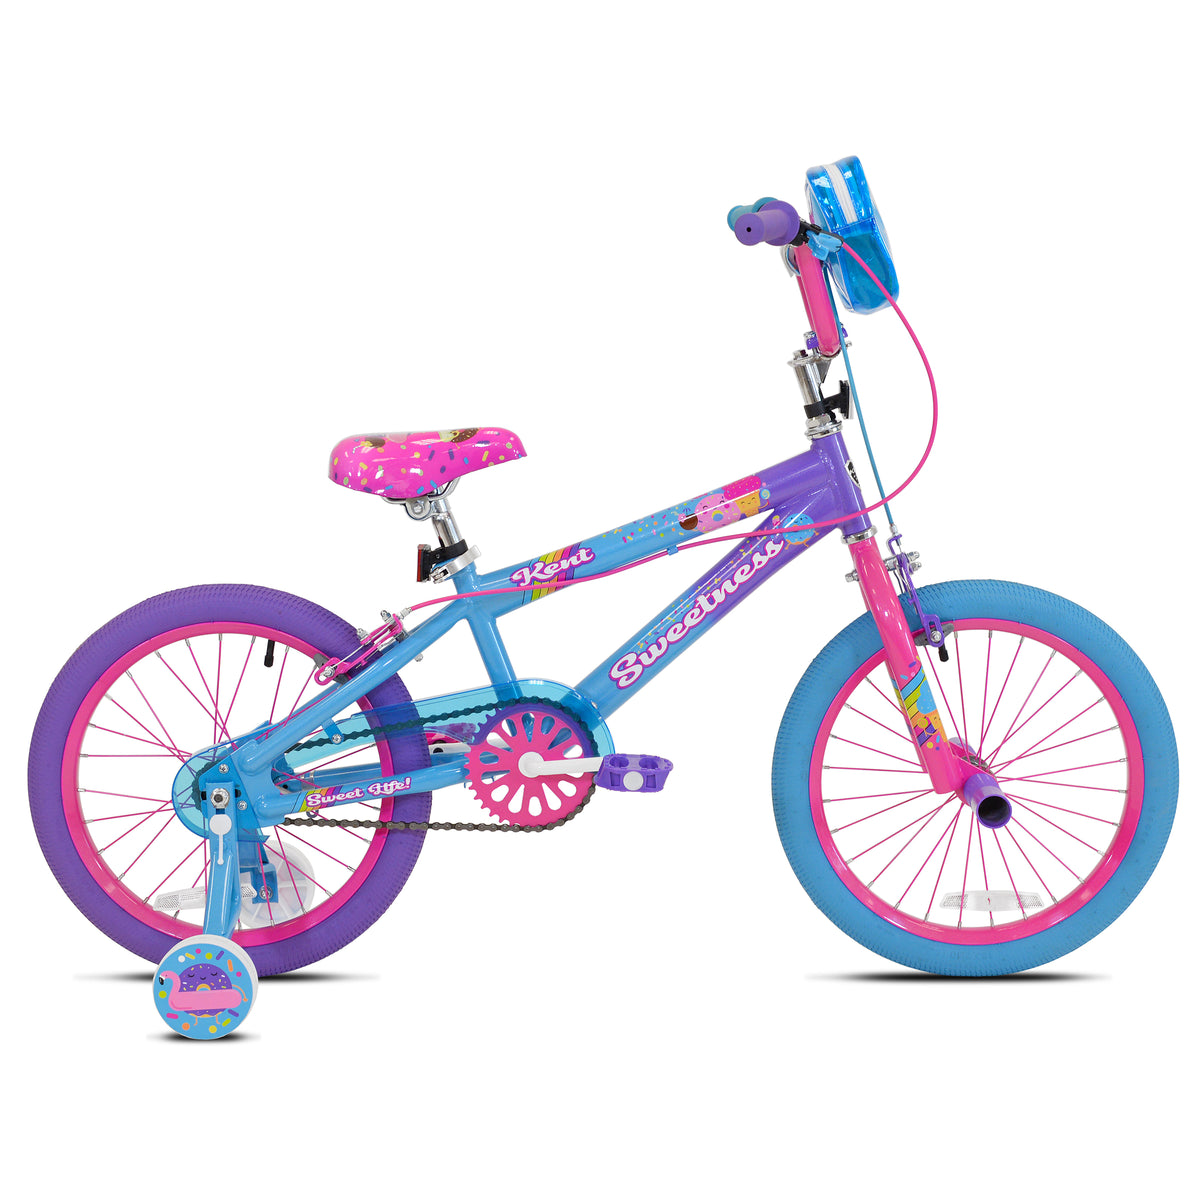 18" Kent Sweetness | BMX Bike for Kids Ages 5-8